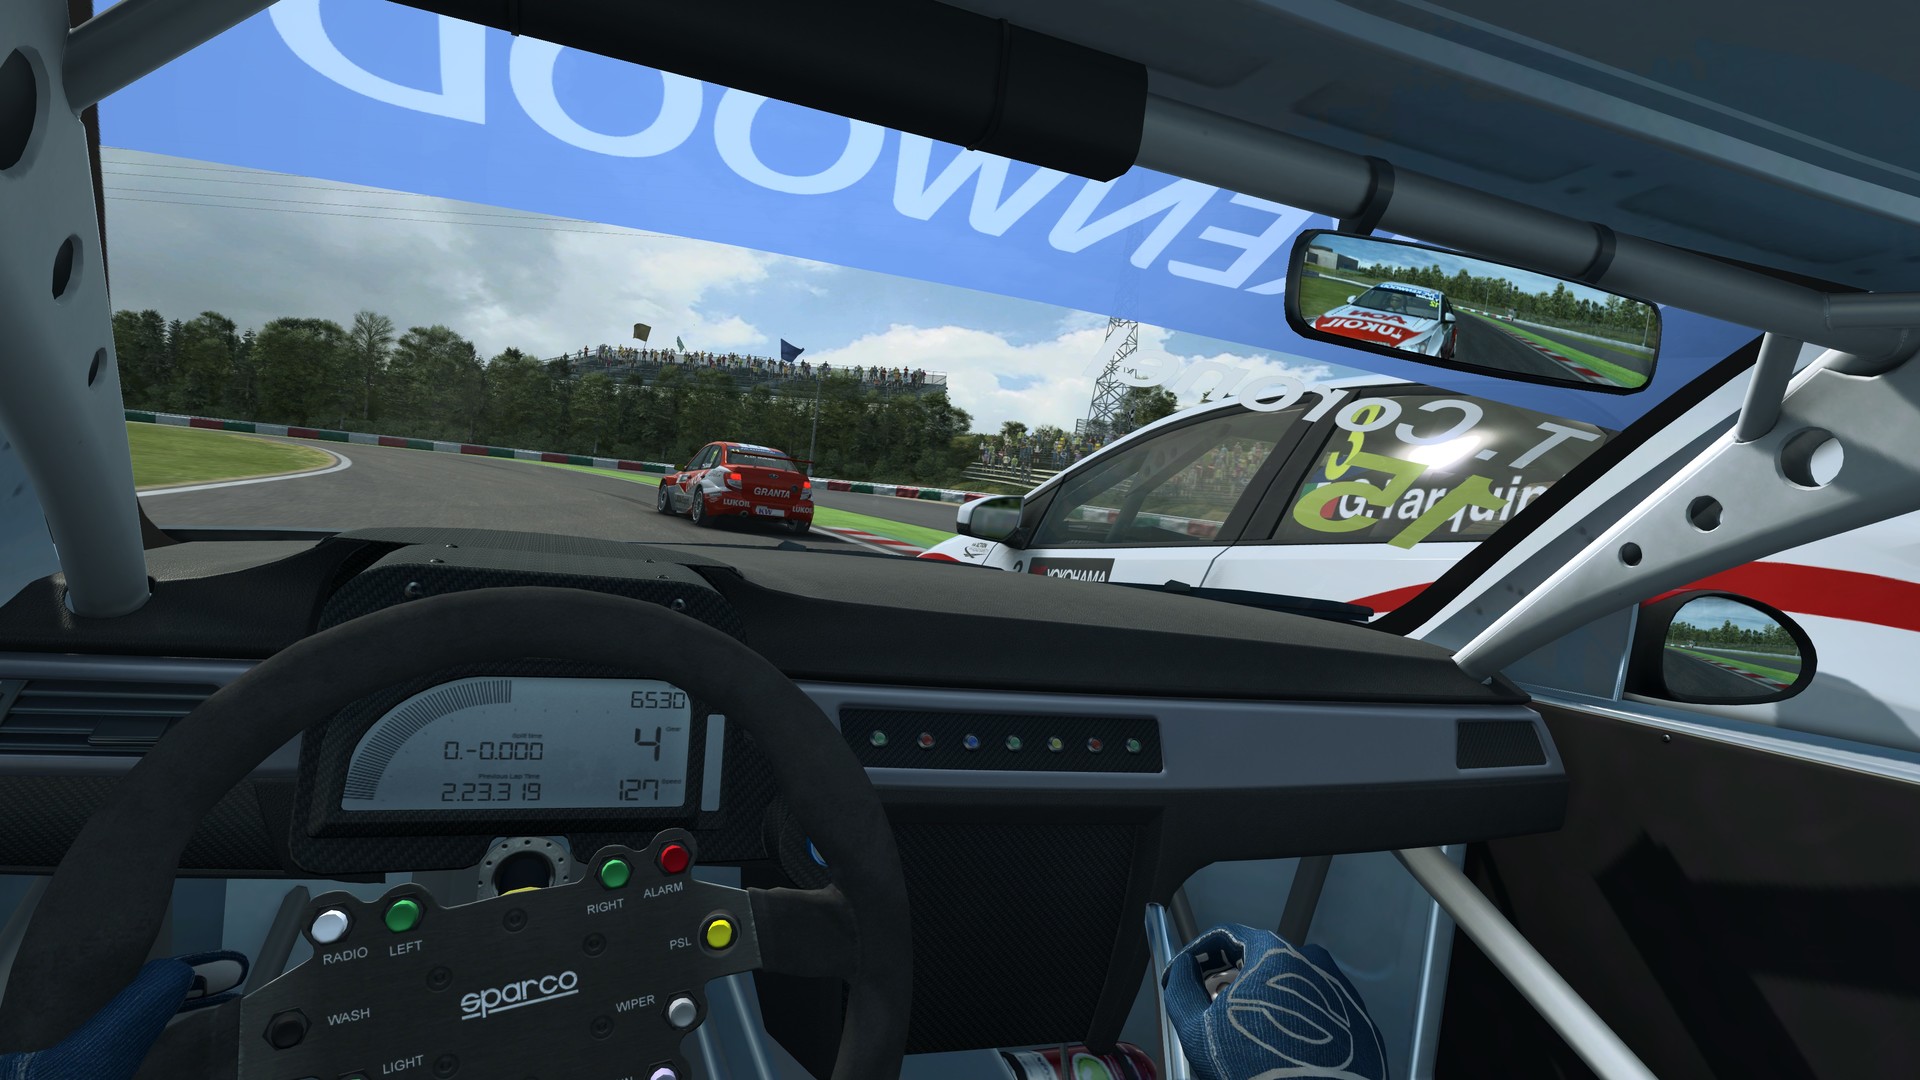 raceroom racing experience pc gameplay